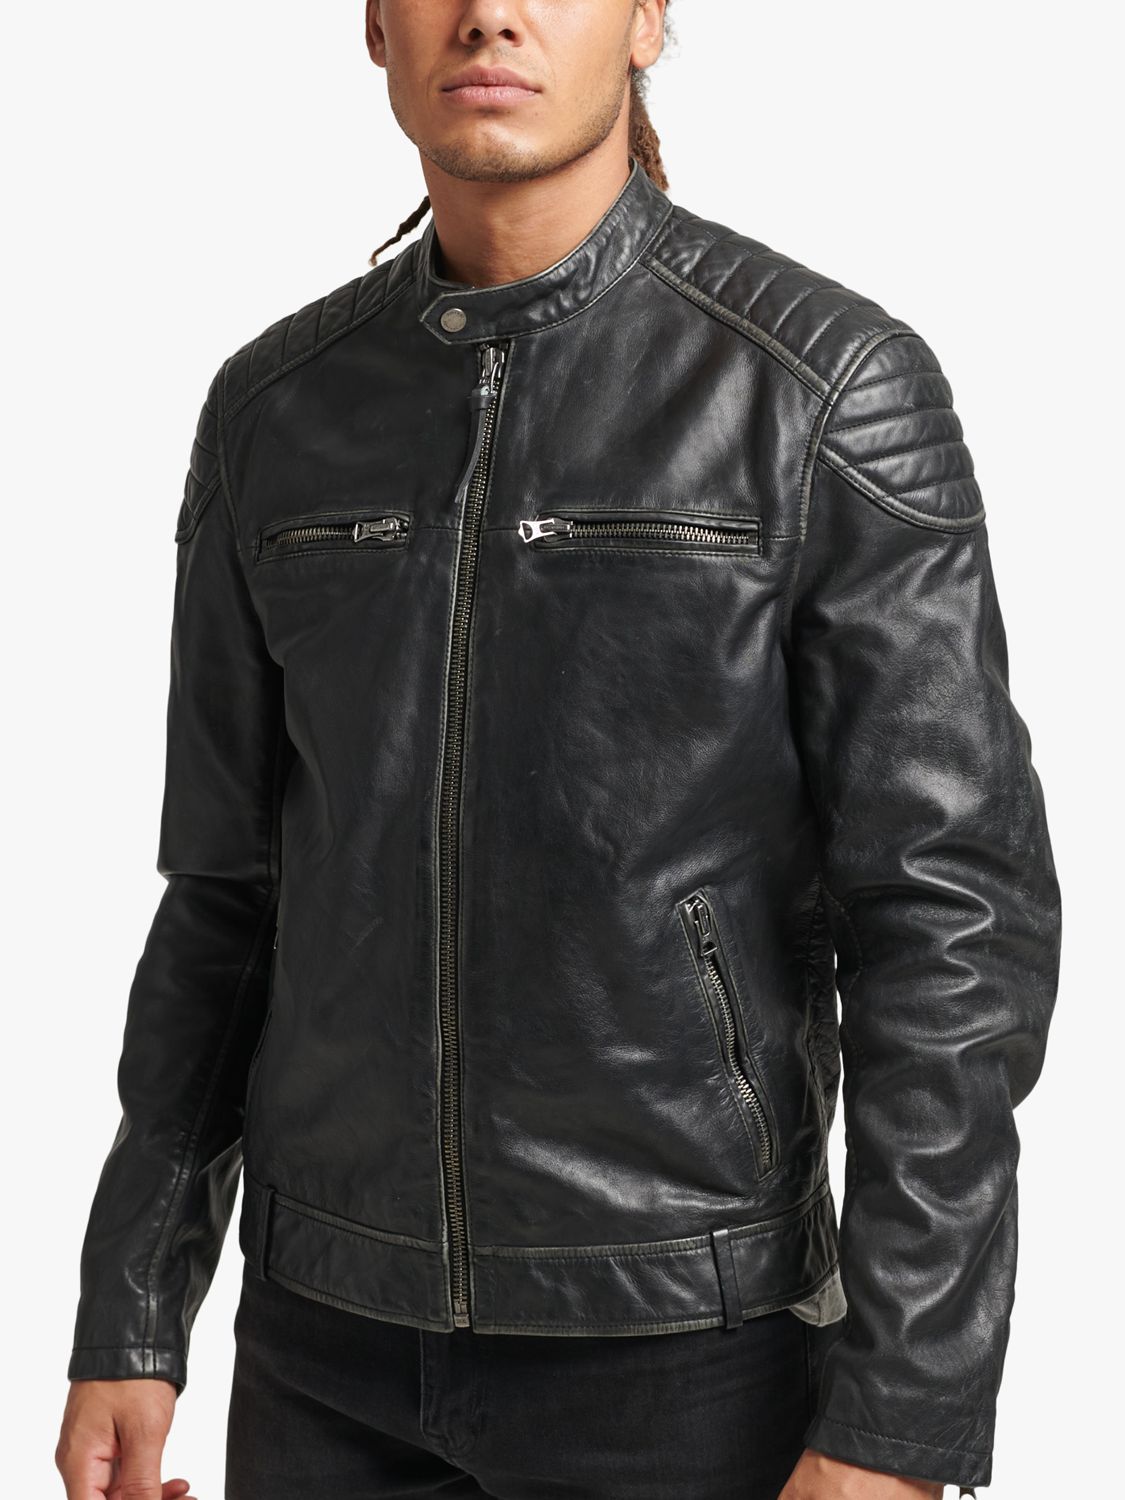 Superdry Leather Moto Racer Jacket, Black at John Lewis & Partners